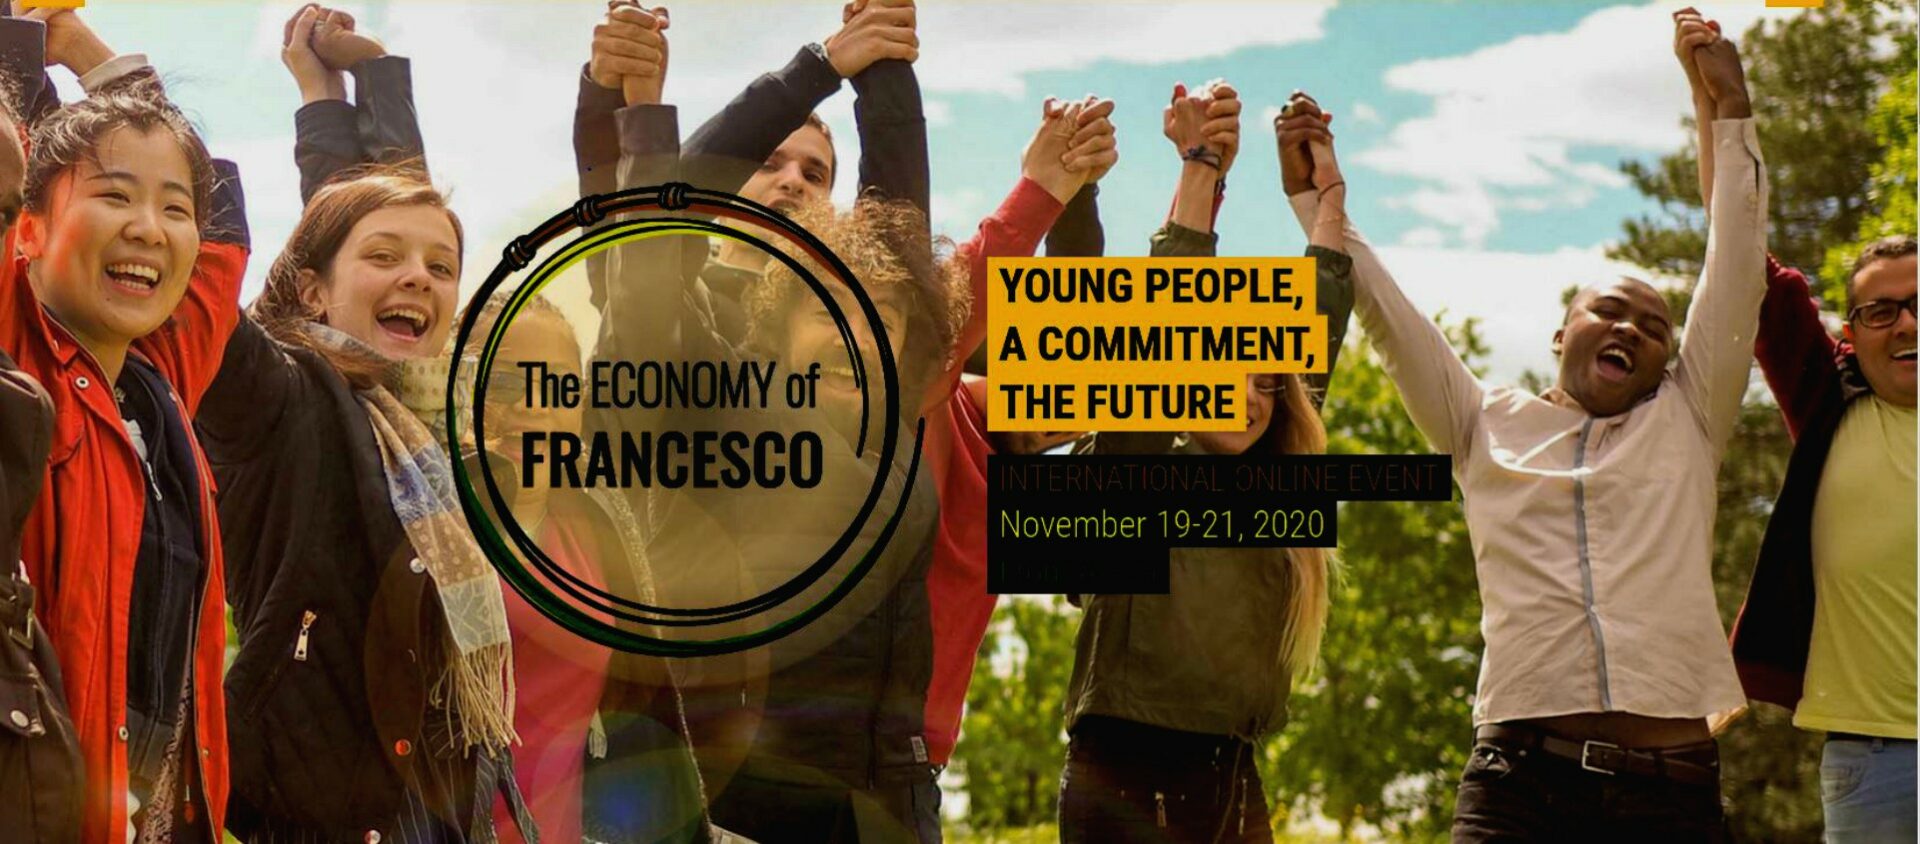 Congrès à Assise du 19 au 21 novembre 2020 The Economy of Francesco | francescoeconomy.org